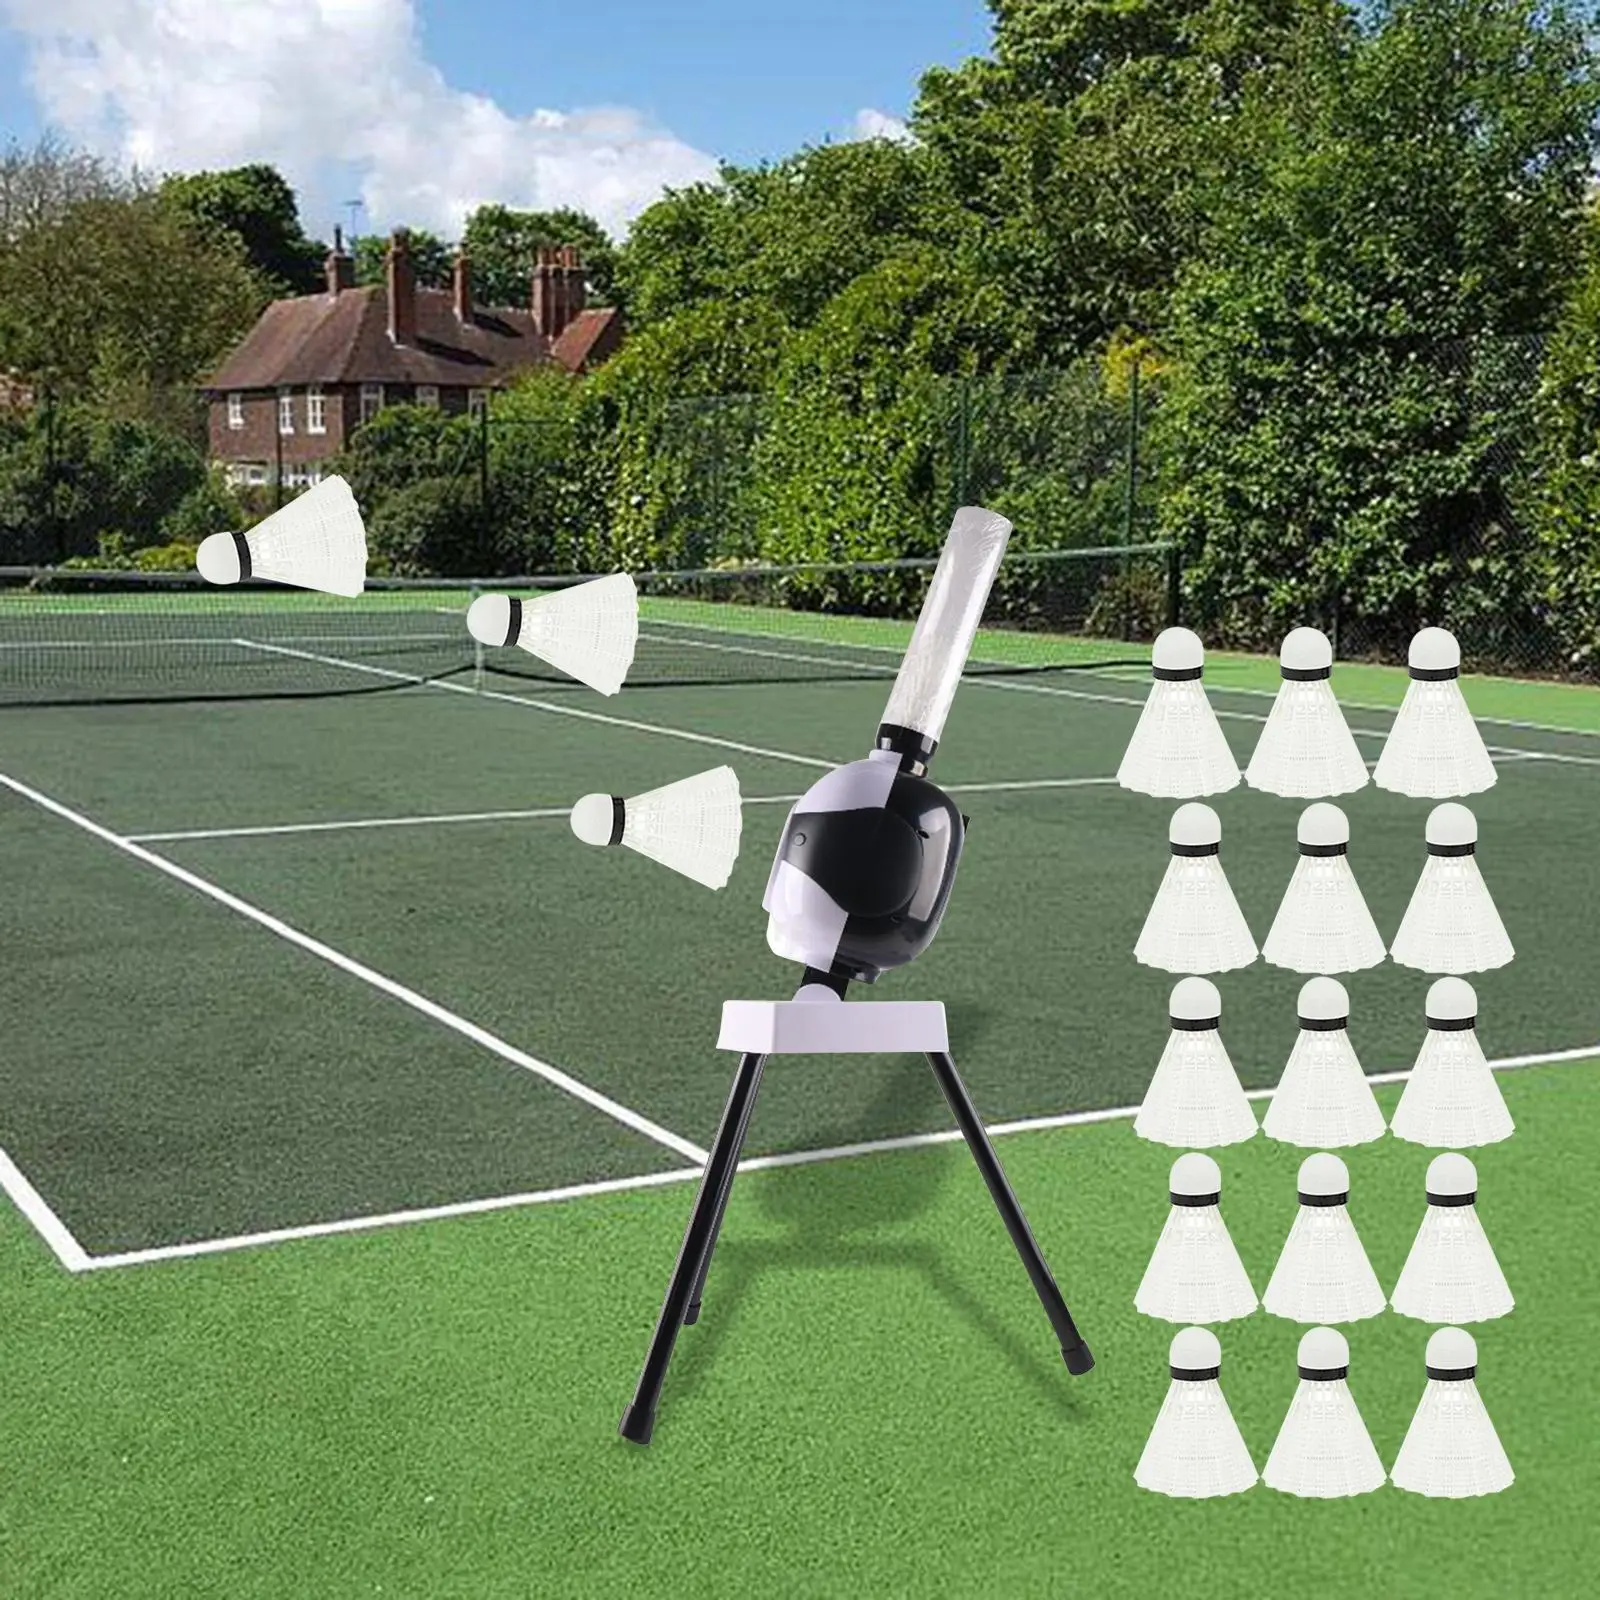 Automatic Badminton Serve Machine Practice Professional Portable Sports Training Electric Badminton Launcher for Kids All Levels